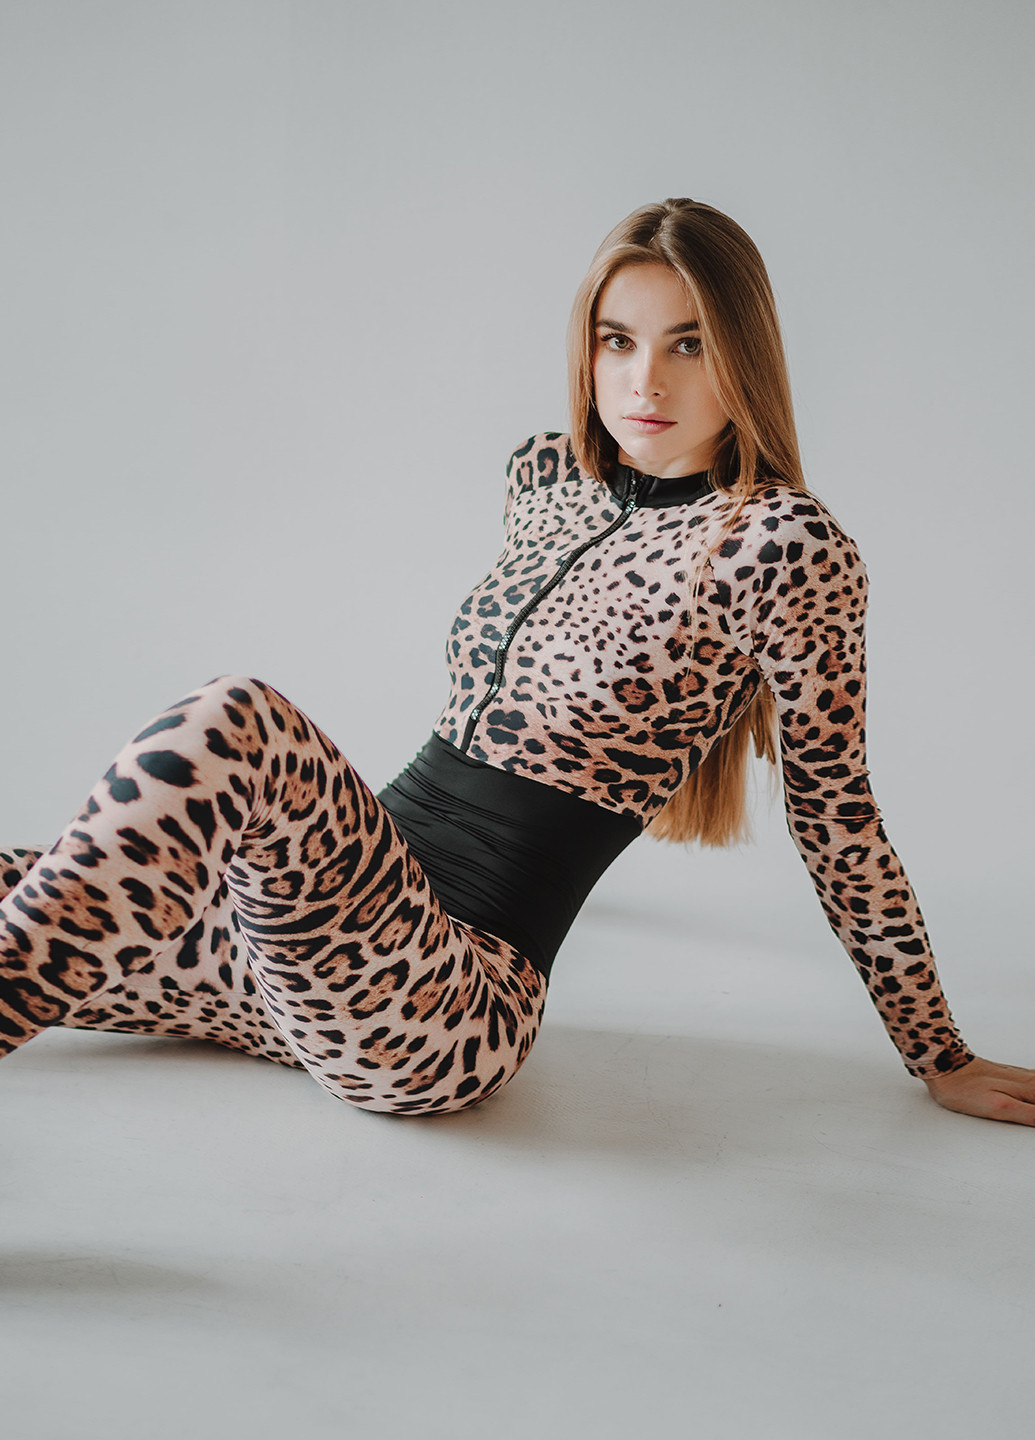 Комбинезон Asalart комбинезон-брюки леопардовый темно-бежевый спортивный полиэстер, бифлекс